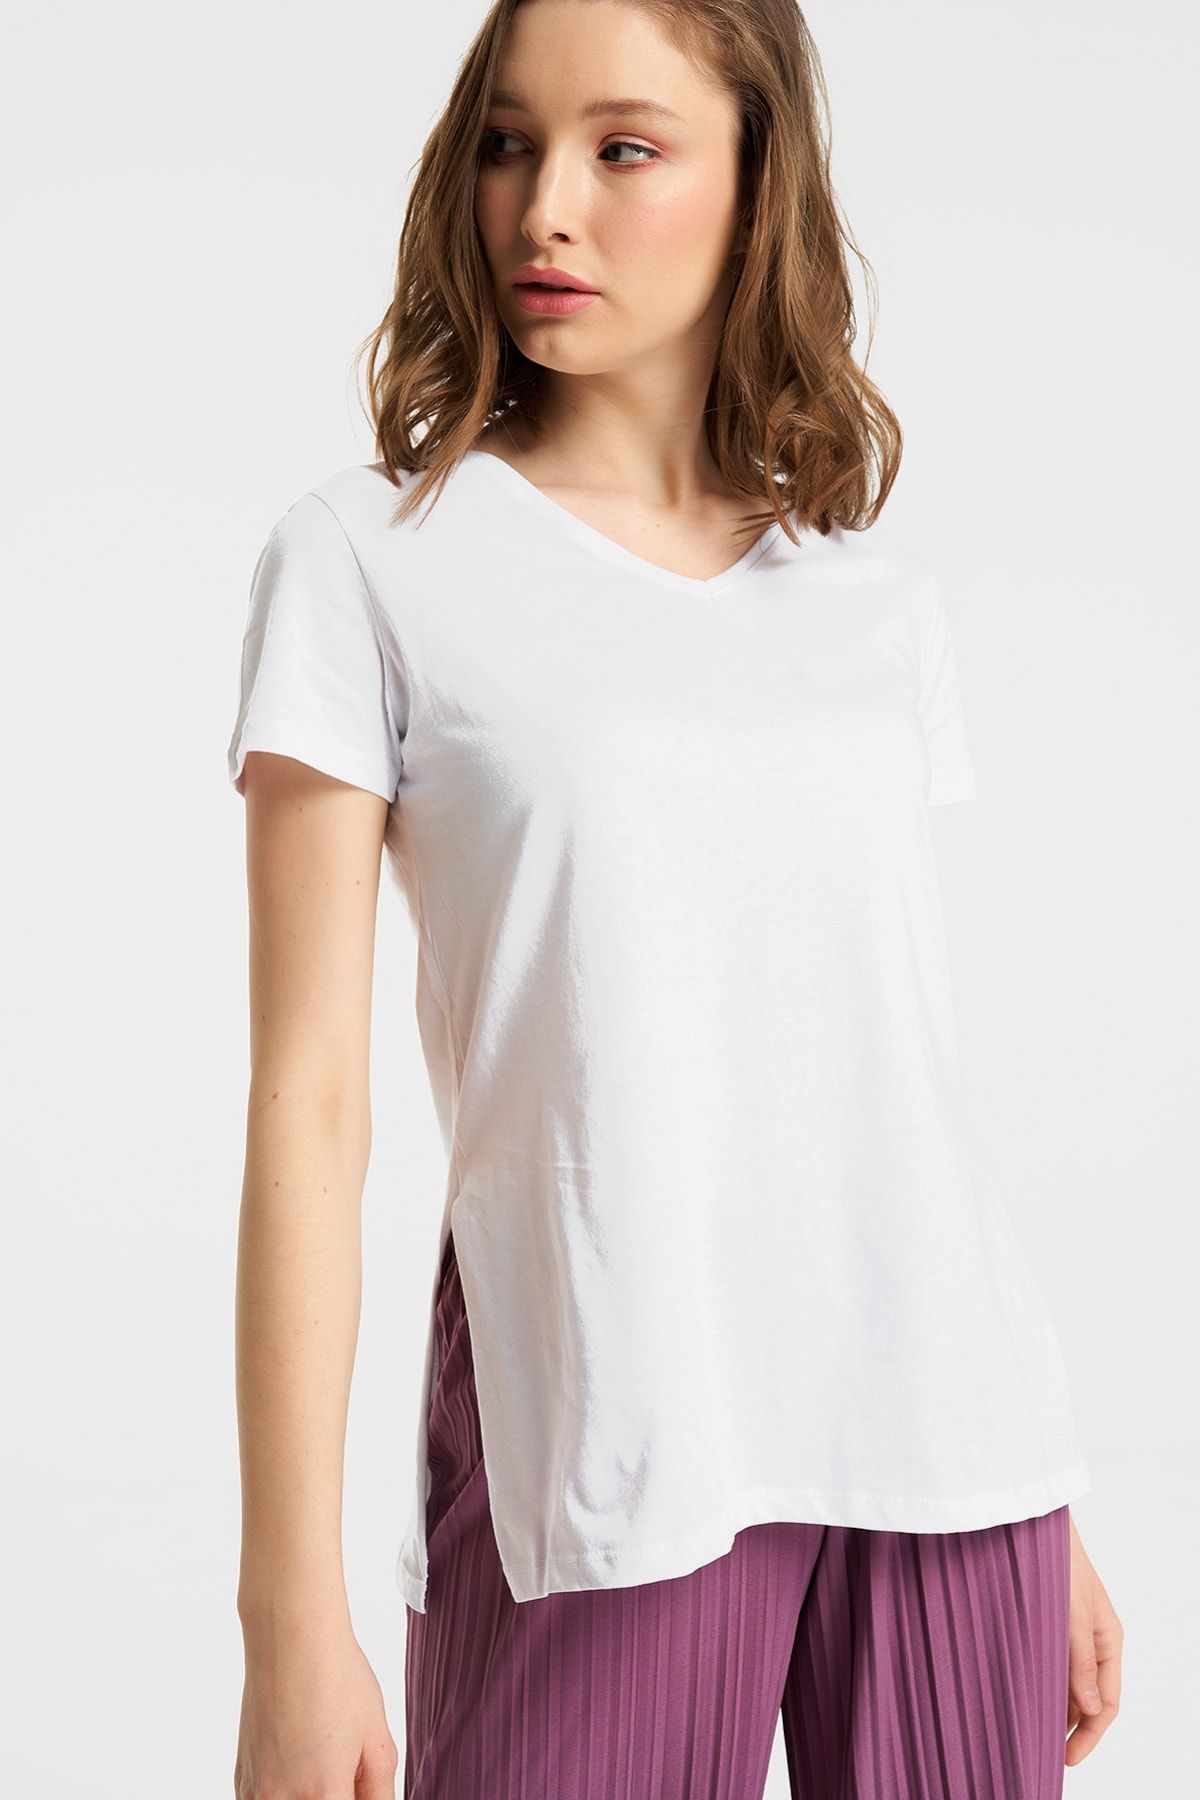 New Now Kadın Ekru V Yaka Yırtmaçlı Basic T-shirt 20Y679101